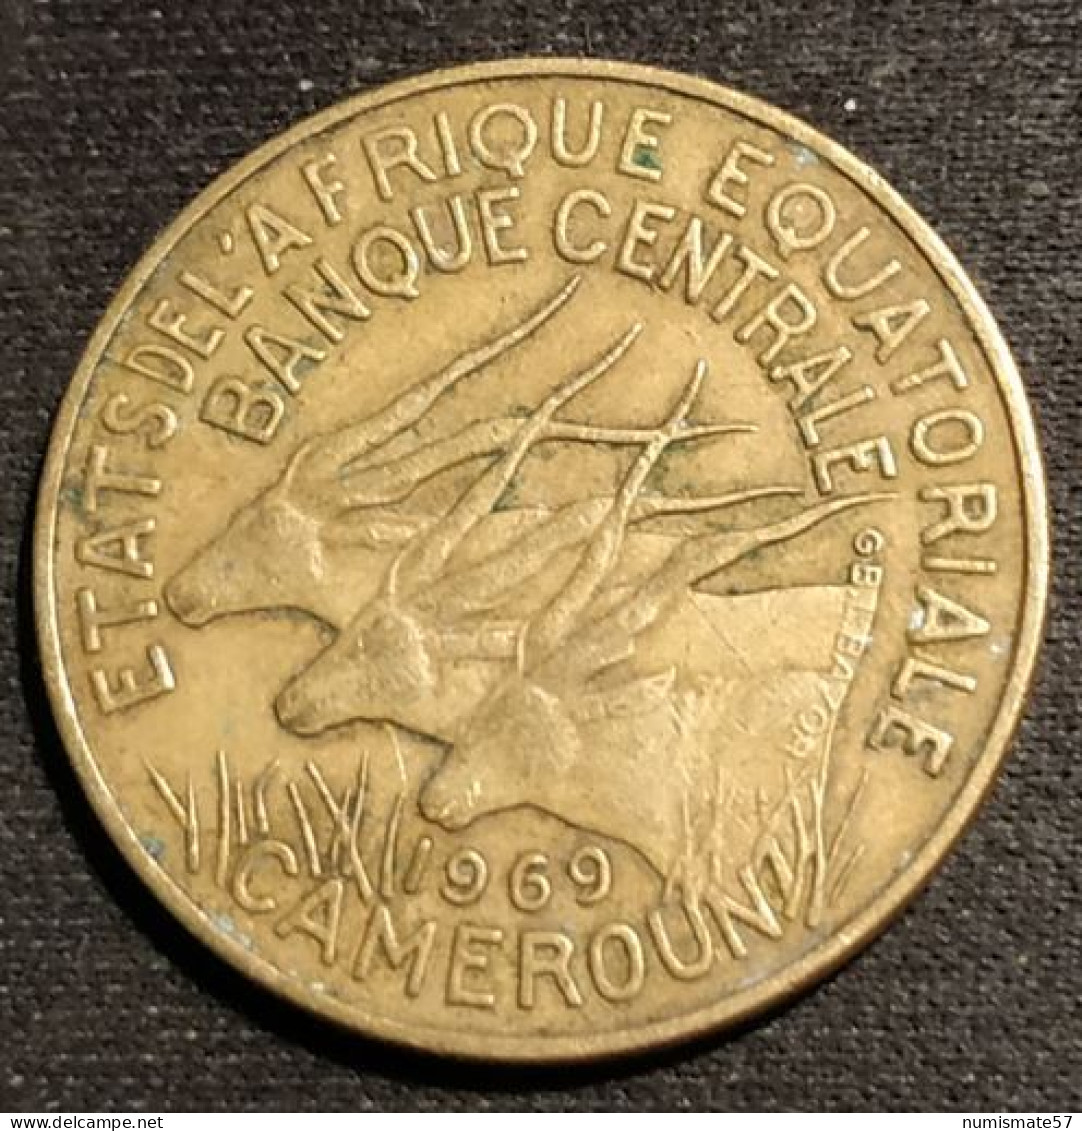 CAMEROUN - ETATS DE L'AFRIQUE EQUATORIALE - 10 FRANCS 1969 - KM 2a - Kamerun